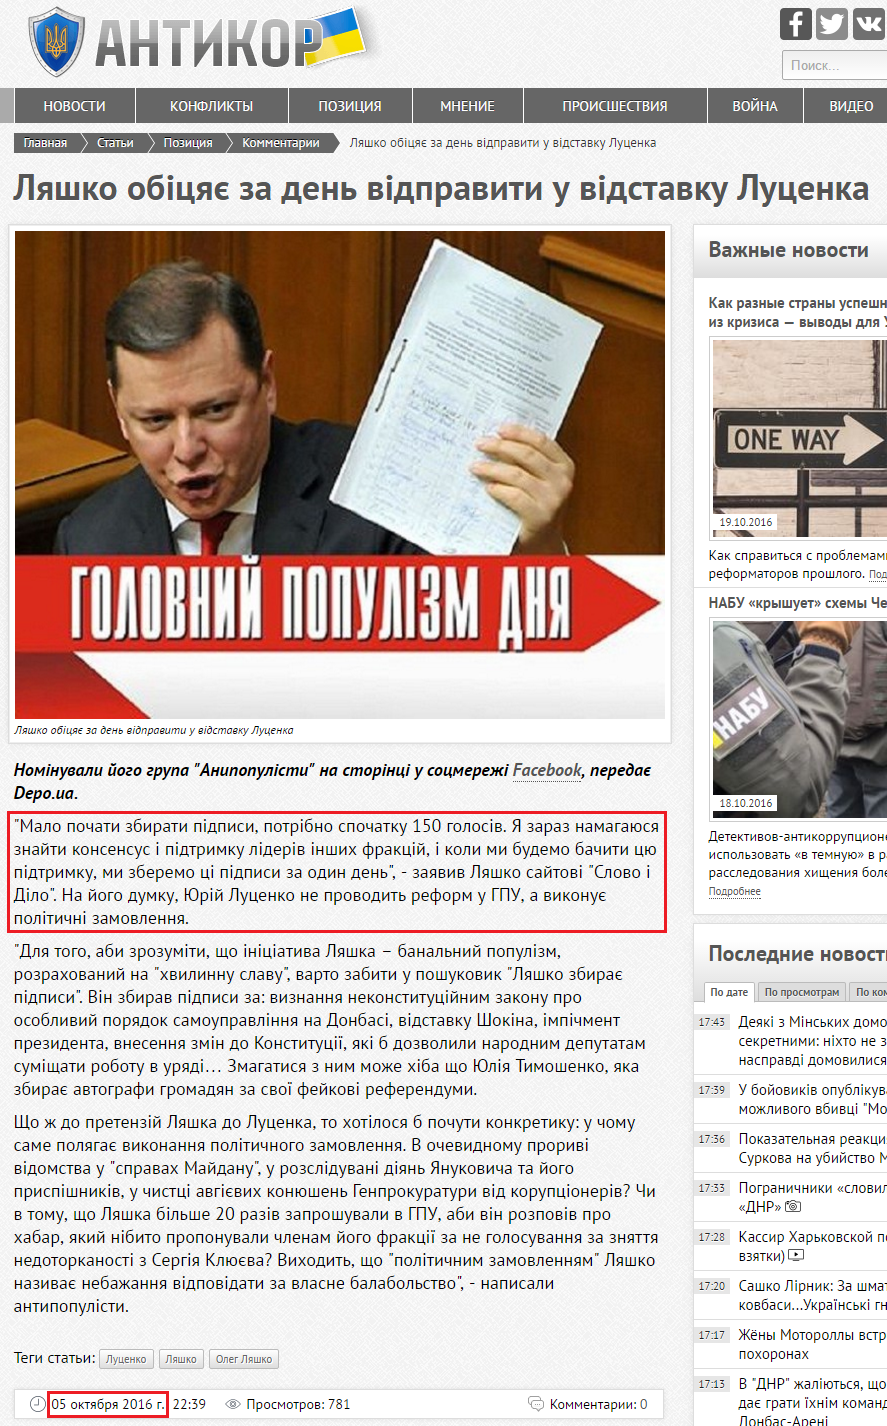 http://antikor.com.ua/articles/127967-ljashko_obitsjaje_za_denj_vidpraviti_u_vidstavku_lutsenka